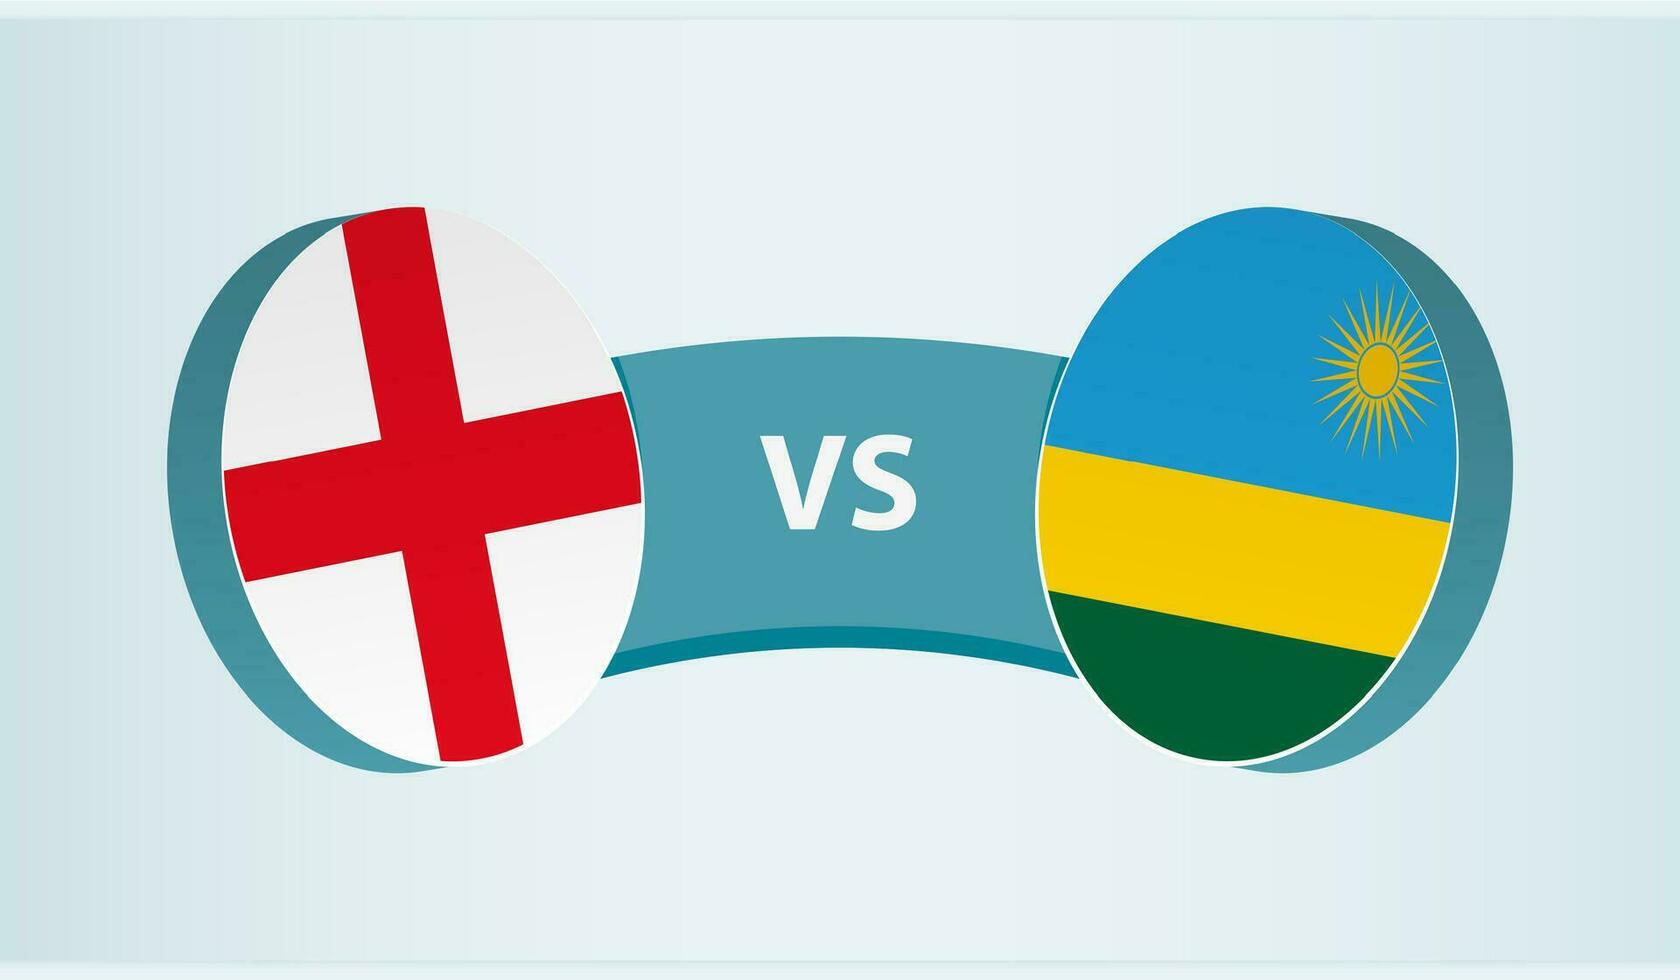 England versus Rwanda, team sports competition concept. vector